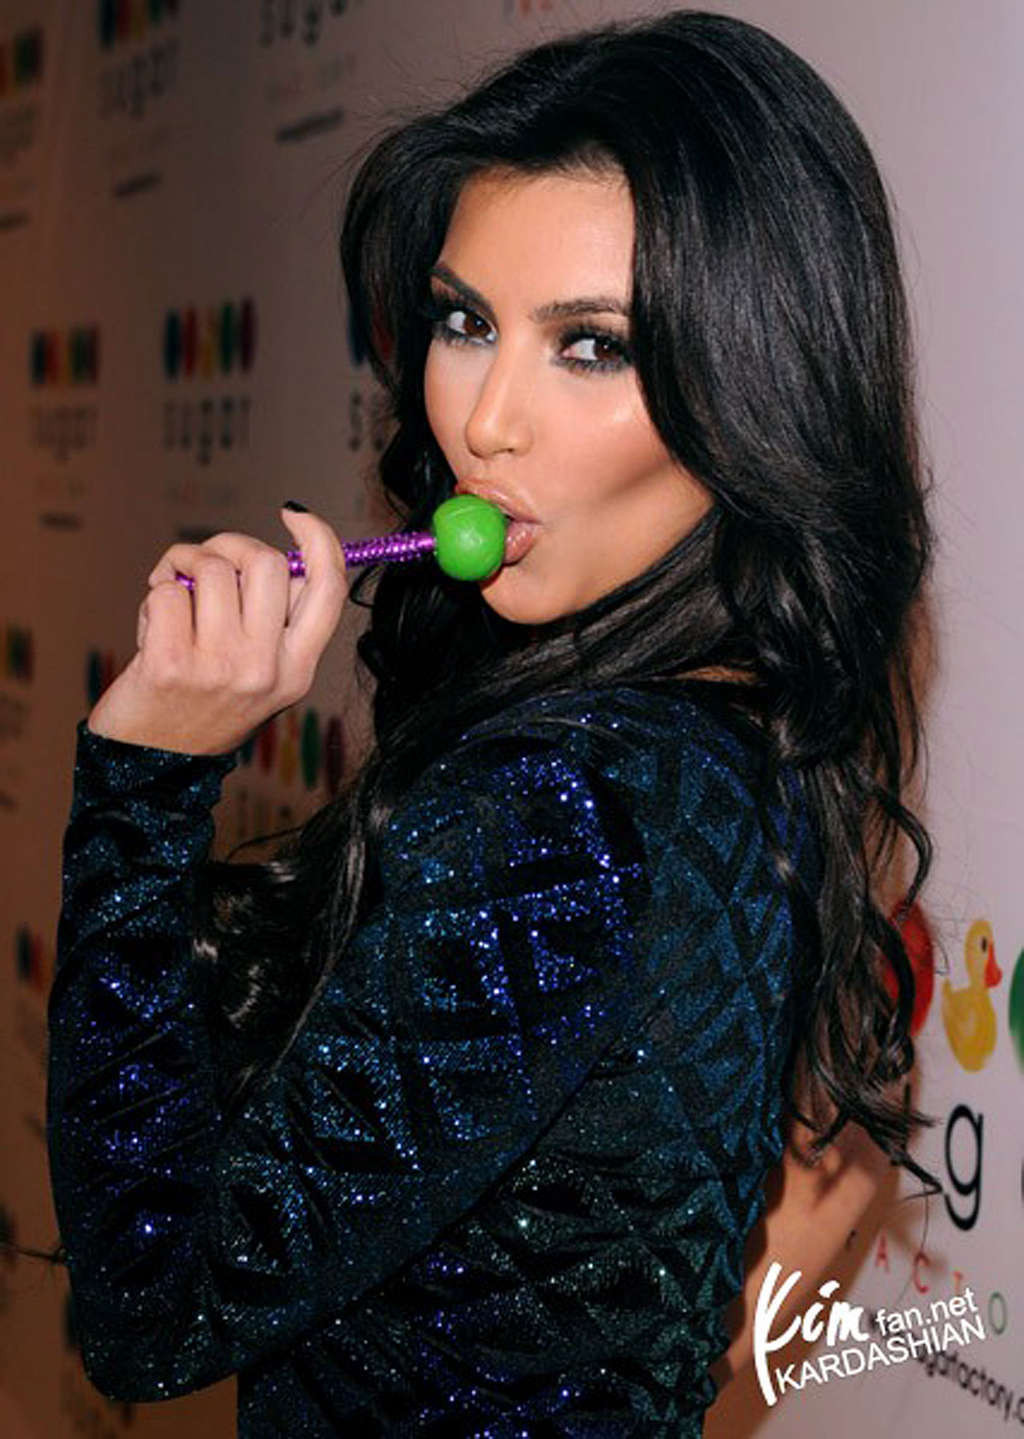 Kim Kardashian licking lollipop on a extremely sexy way hot photos #75363047